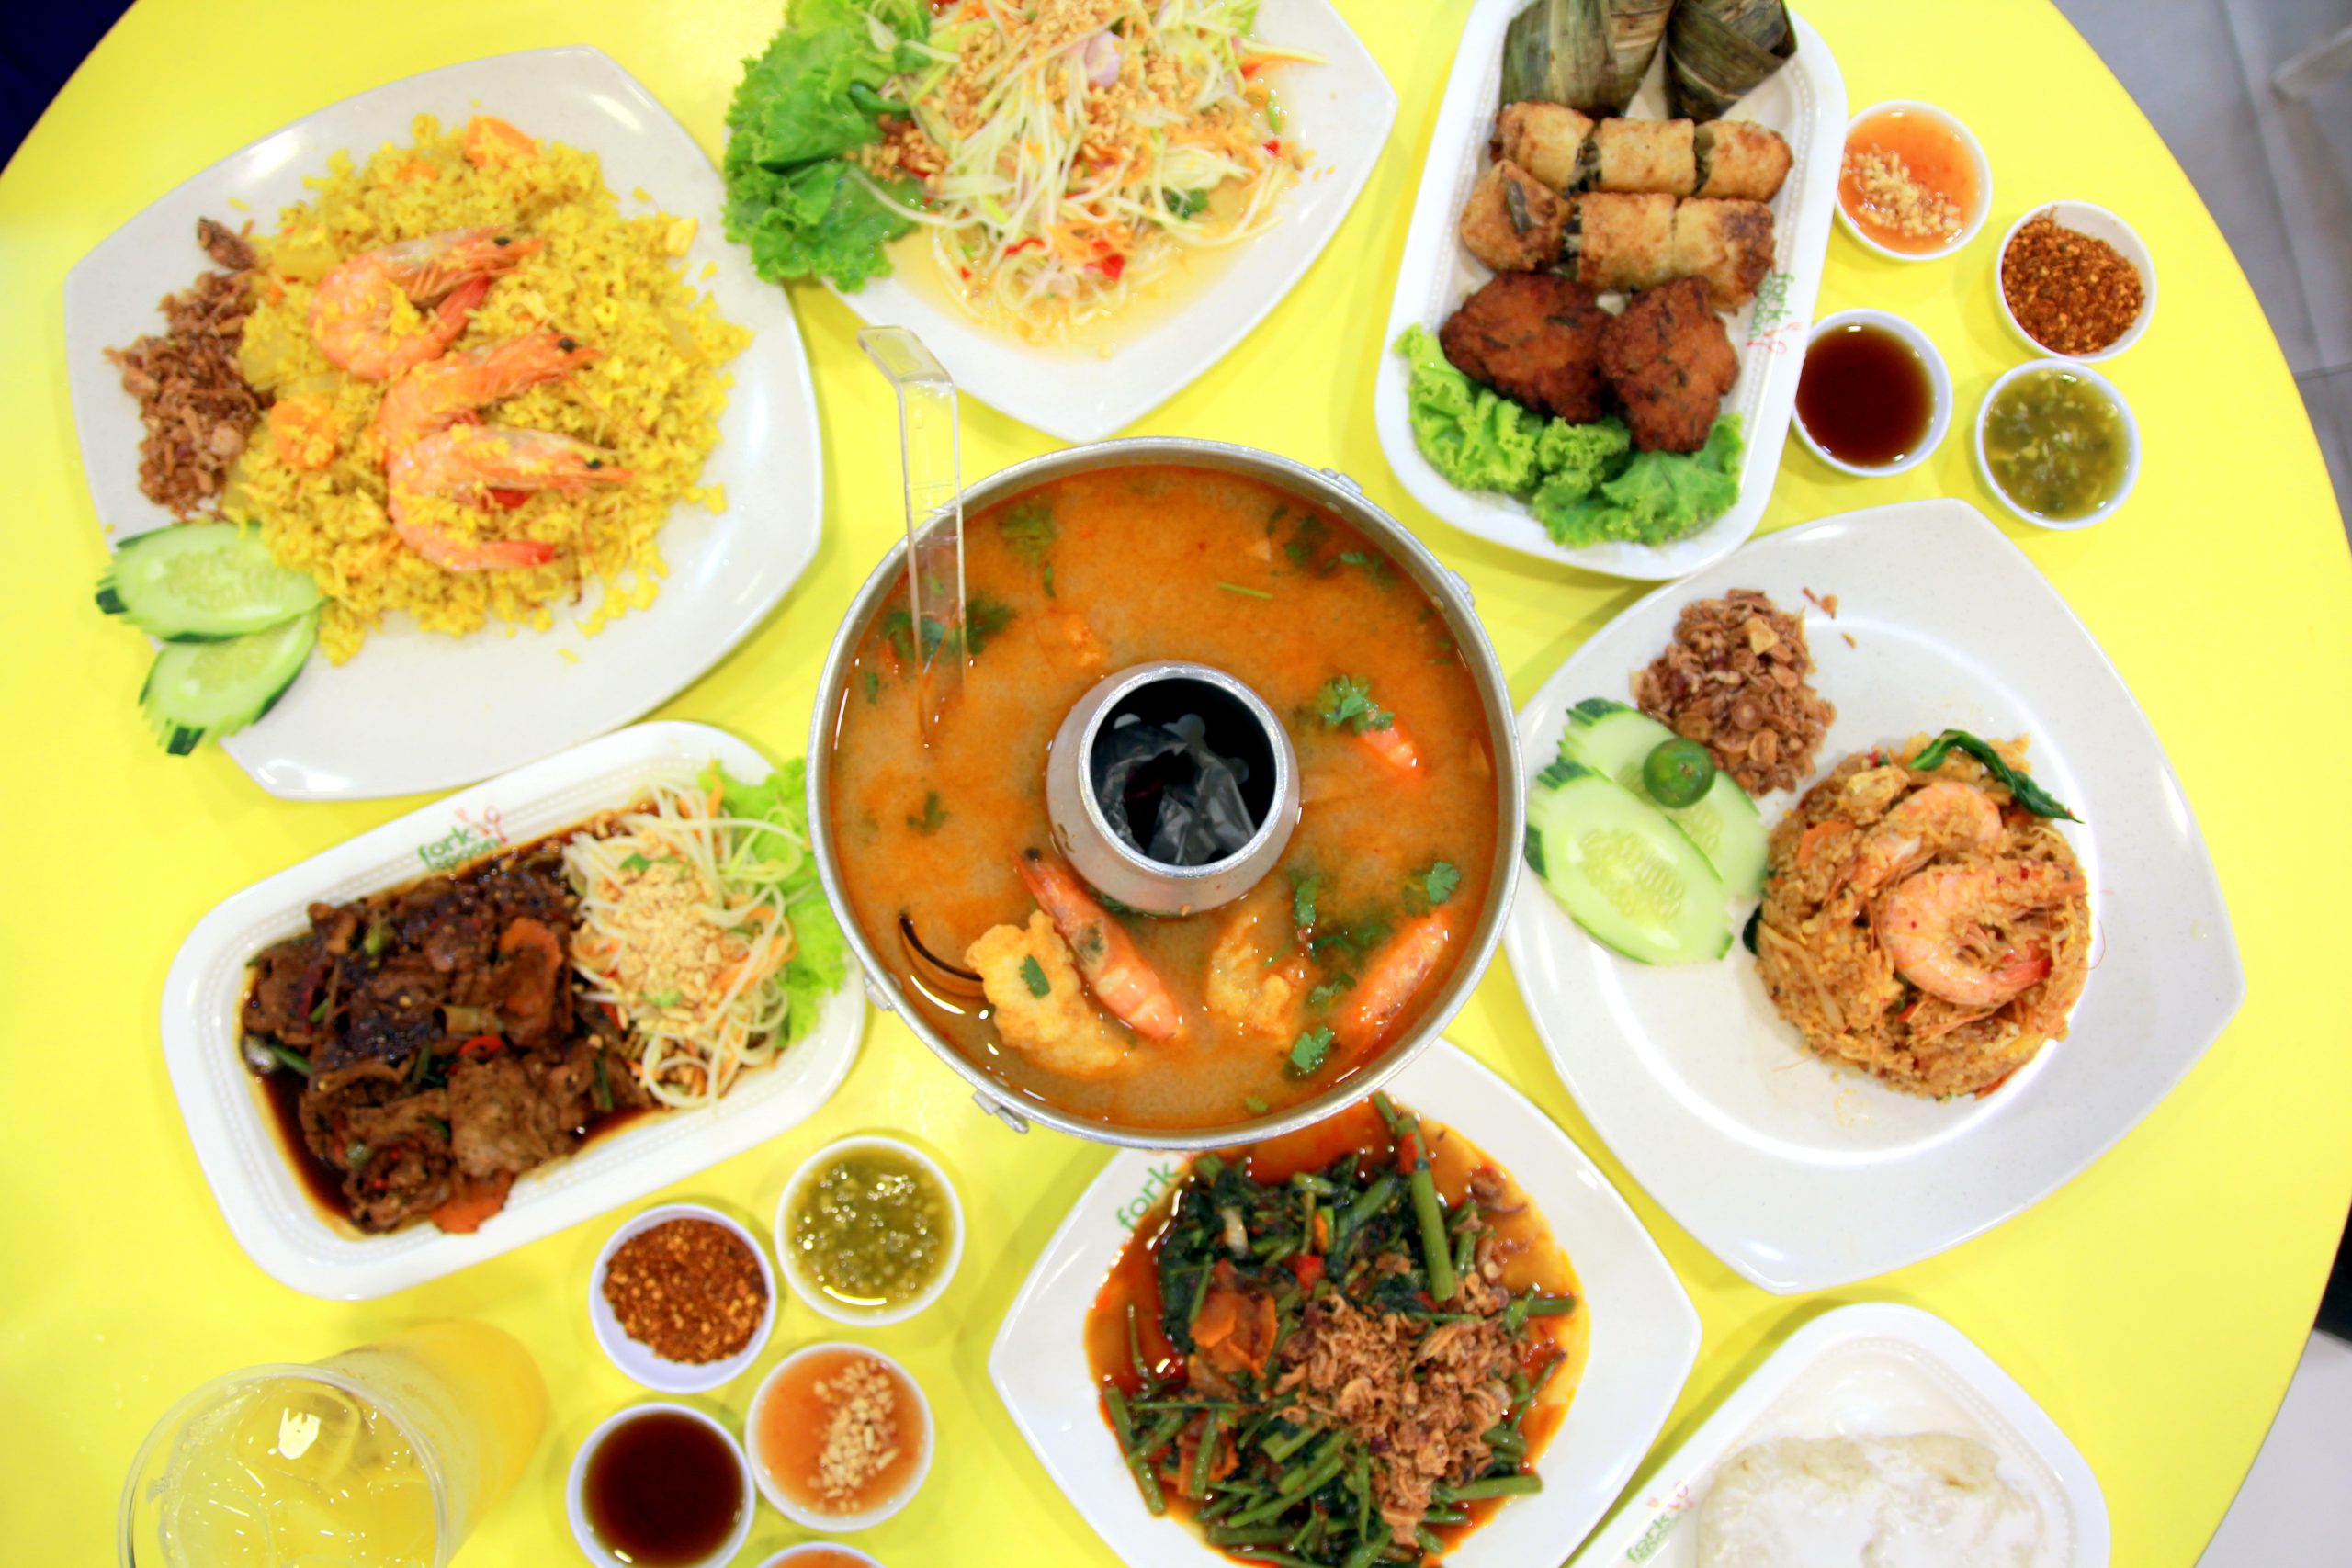 Mahli thai cuisine menu